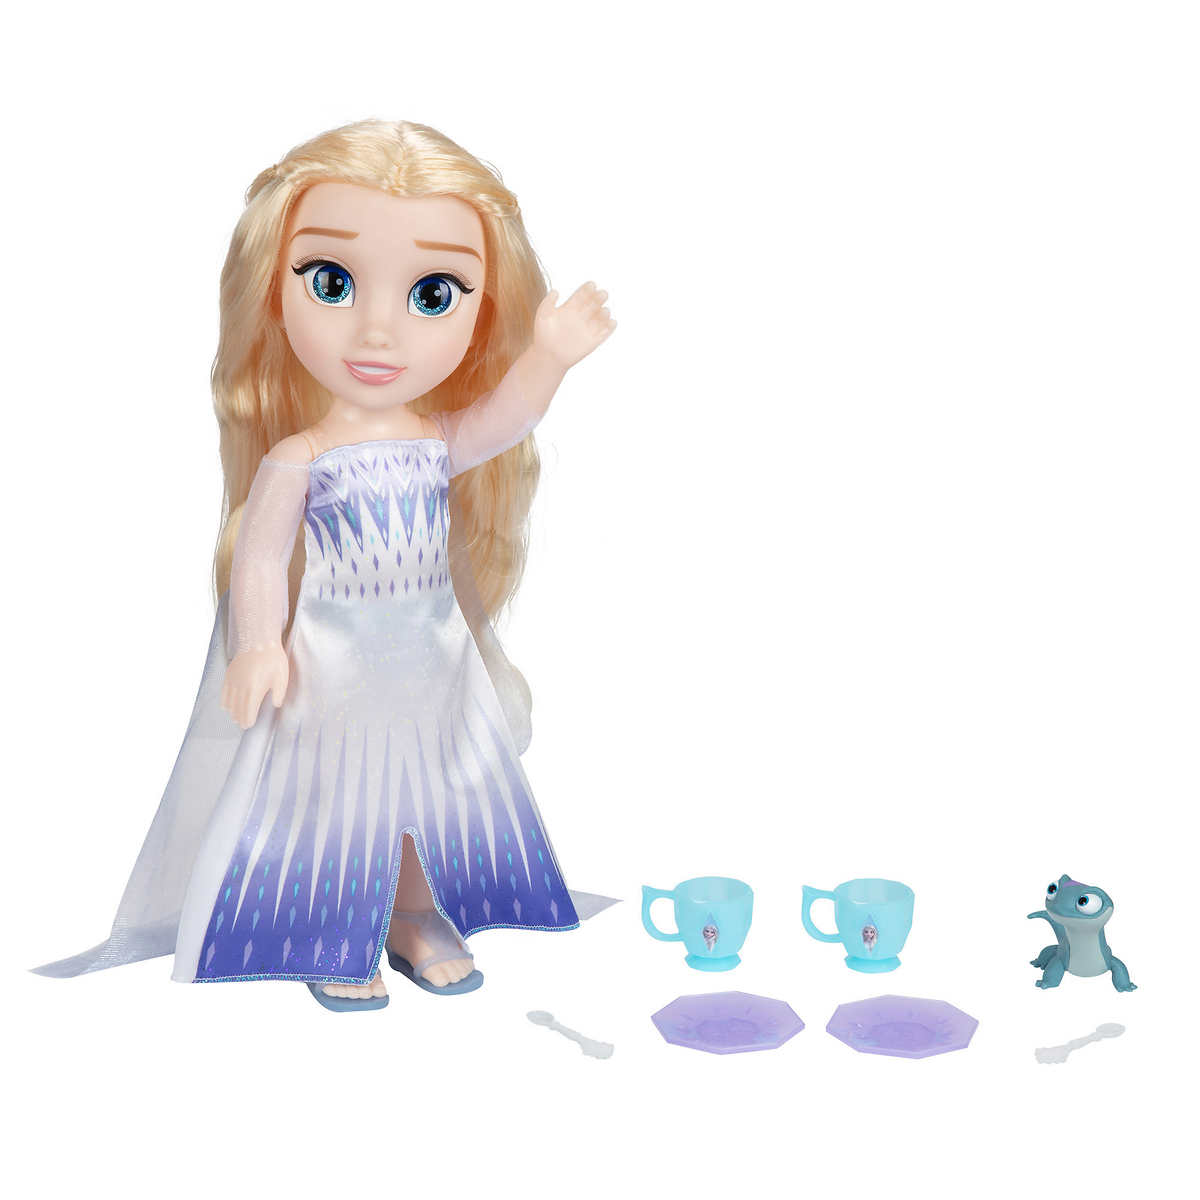 Elsa barbie -  Canada